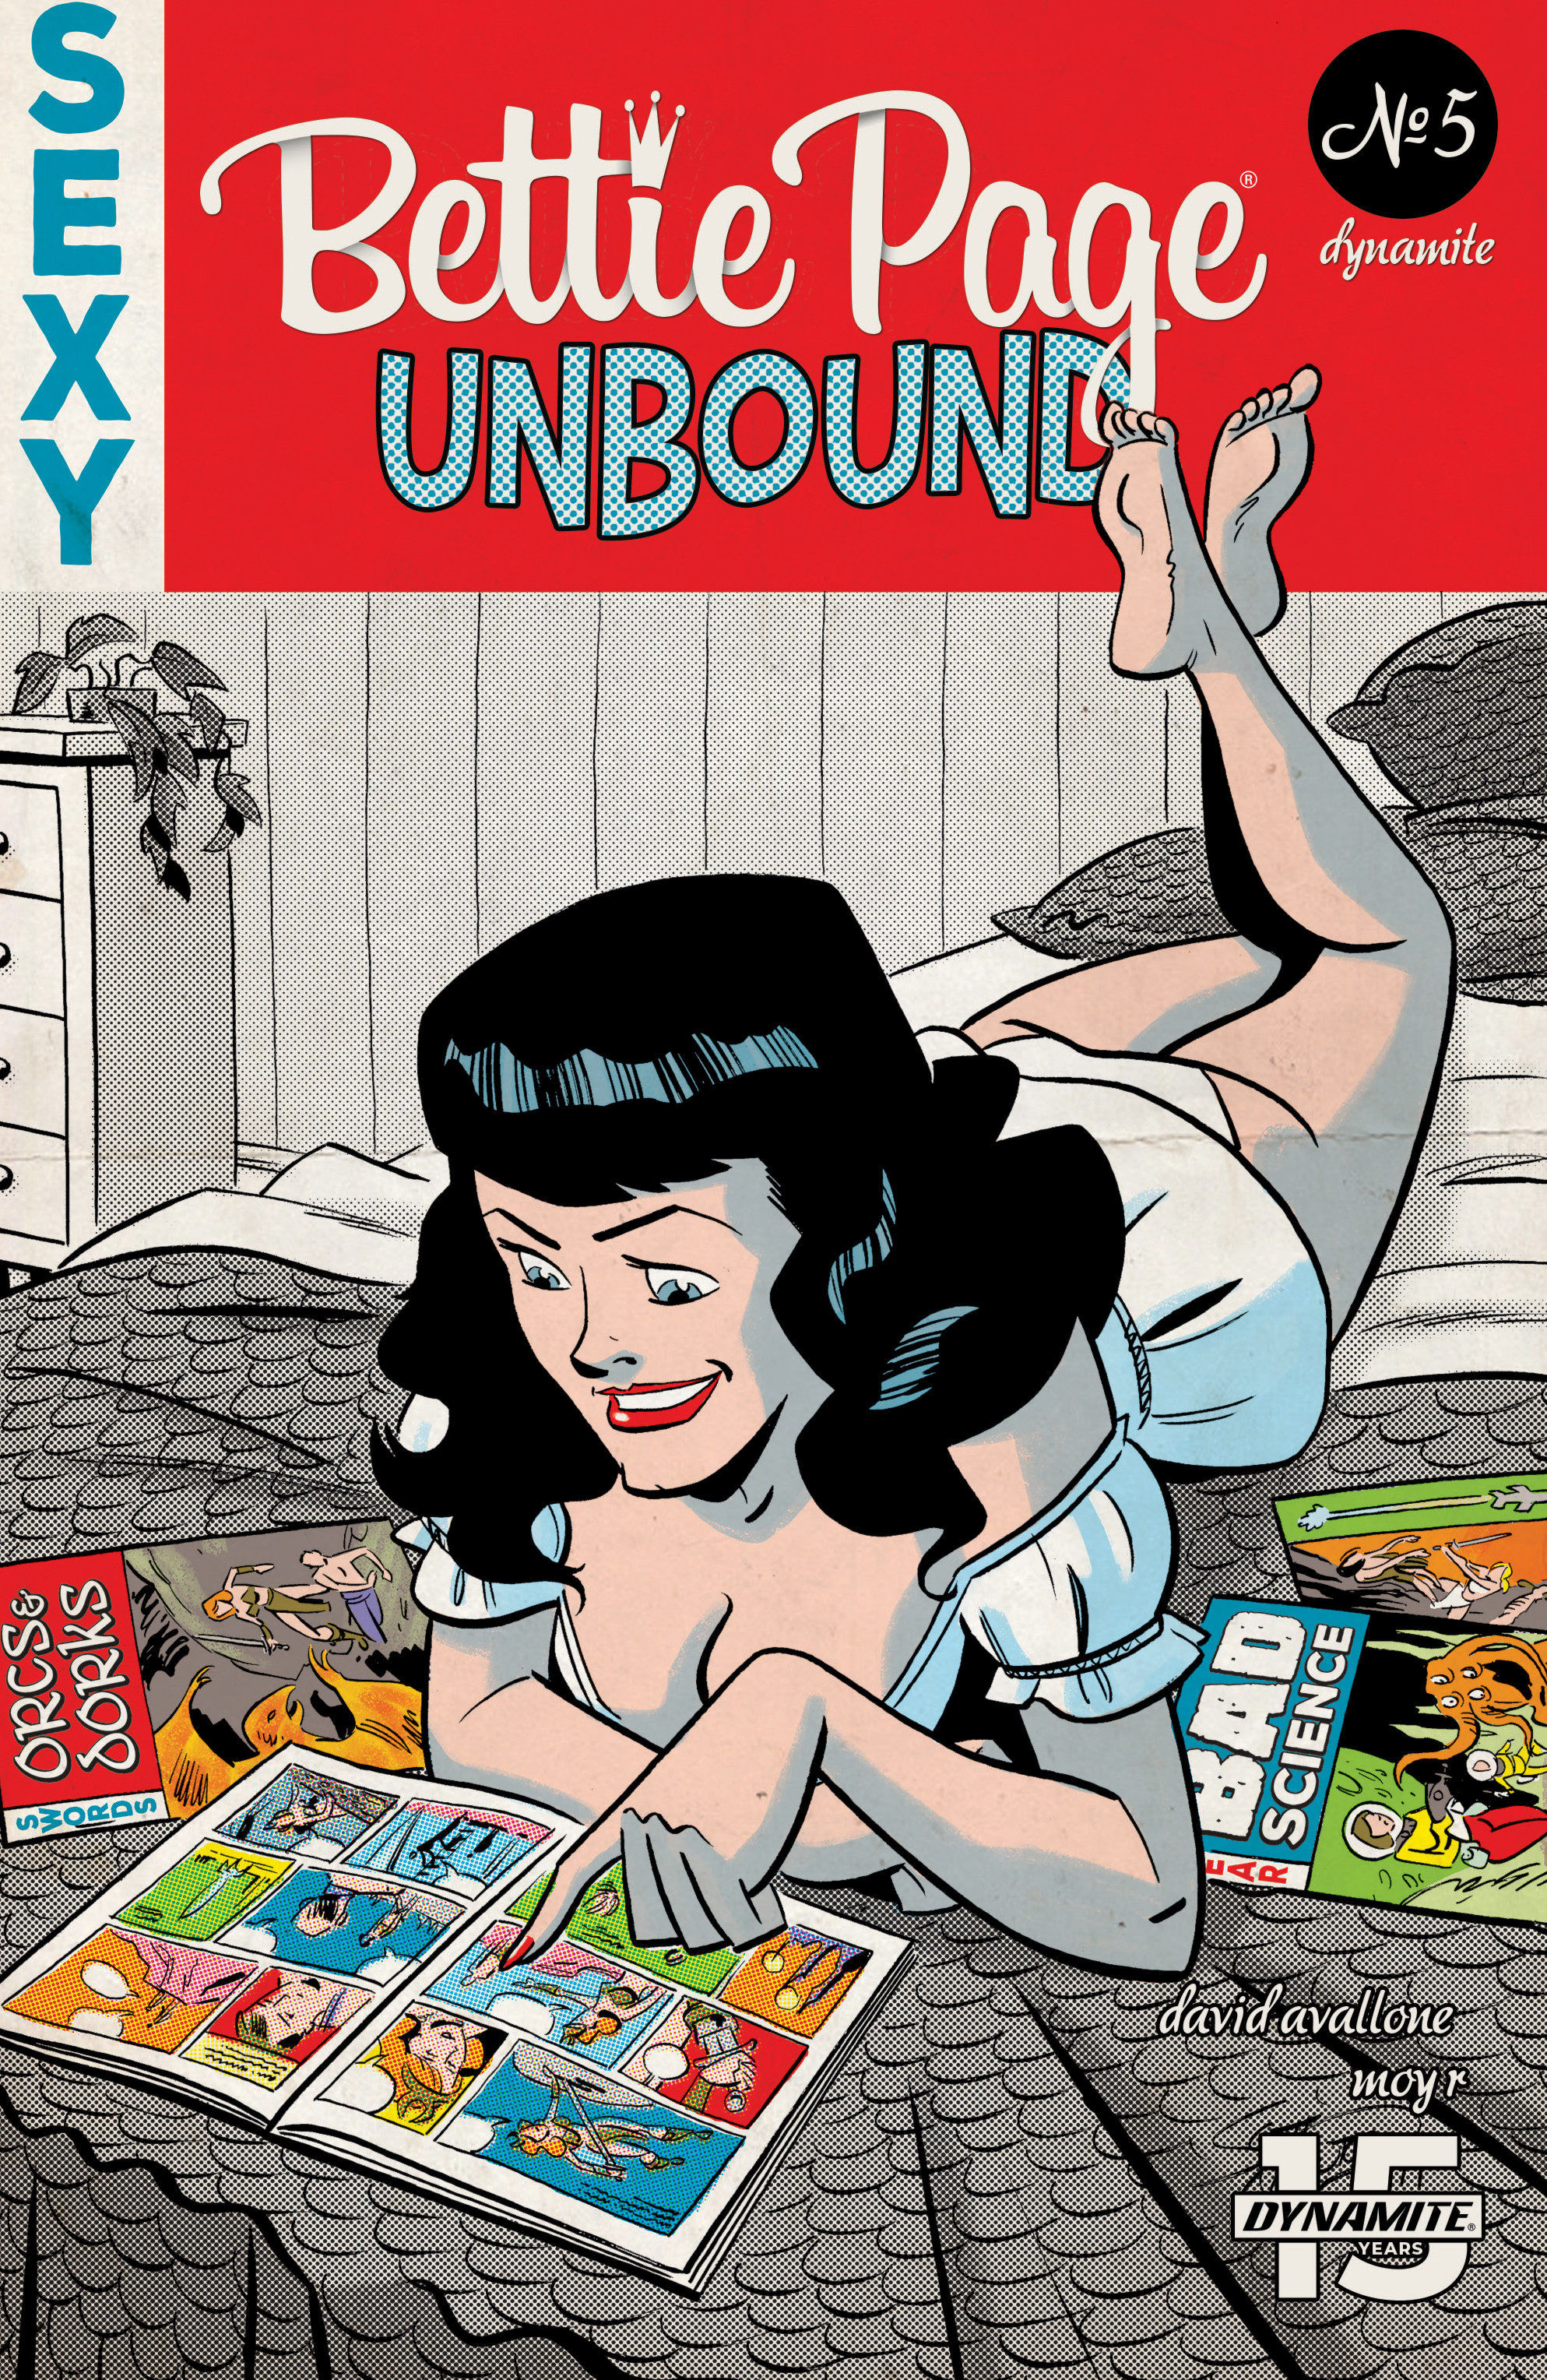 Read online Bettie Page: Unbound comic -  Issue #5 - 2